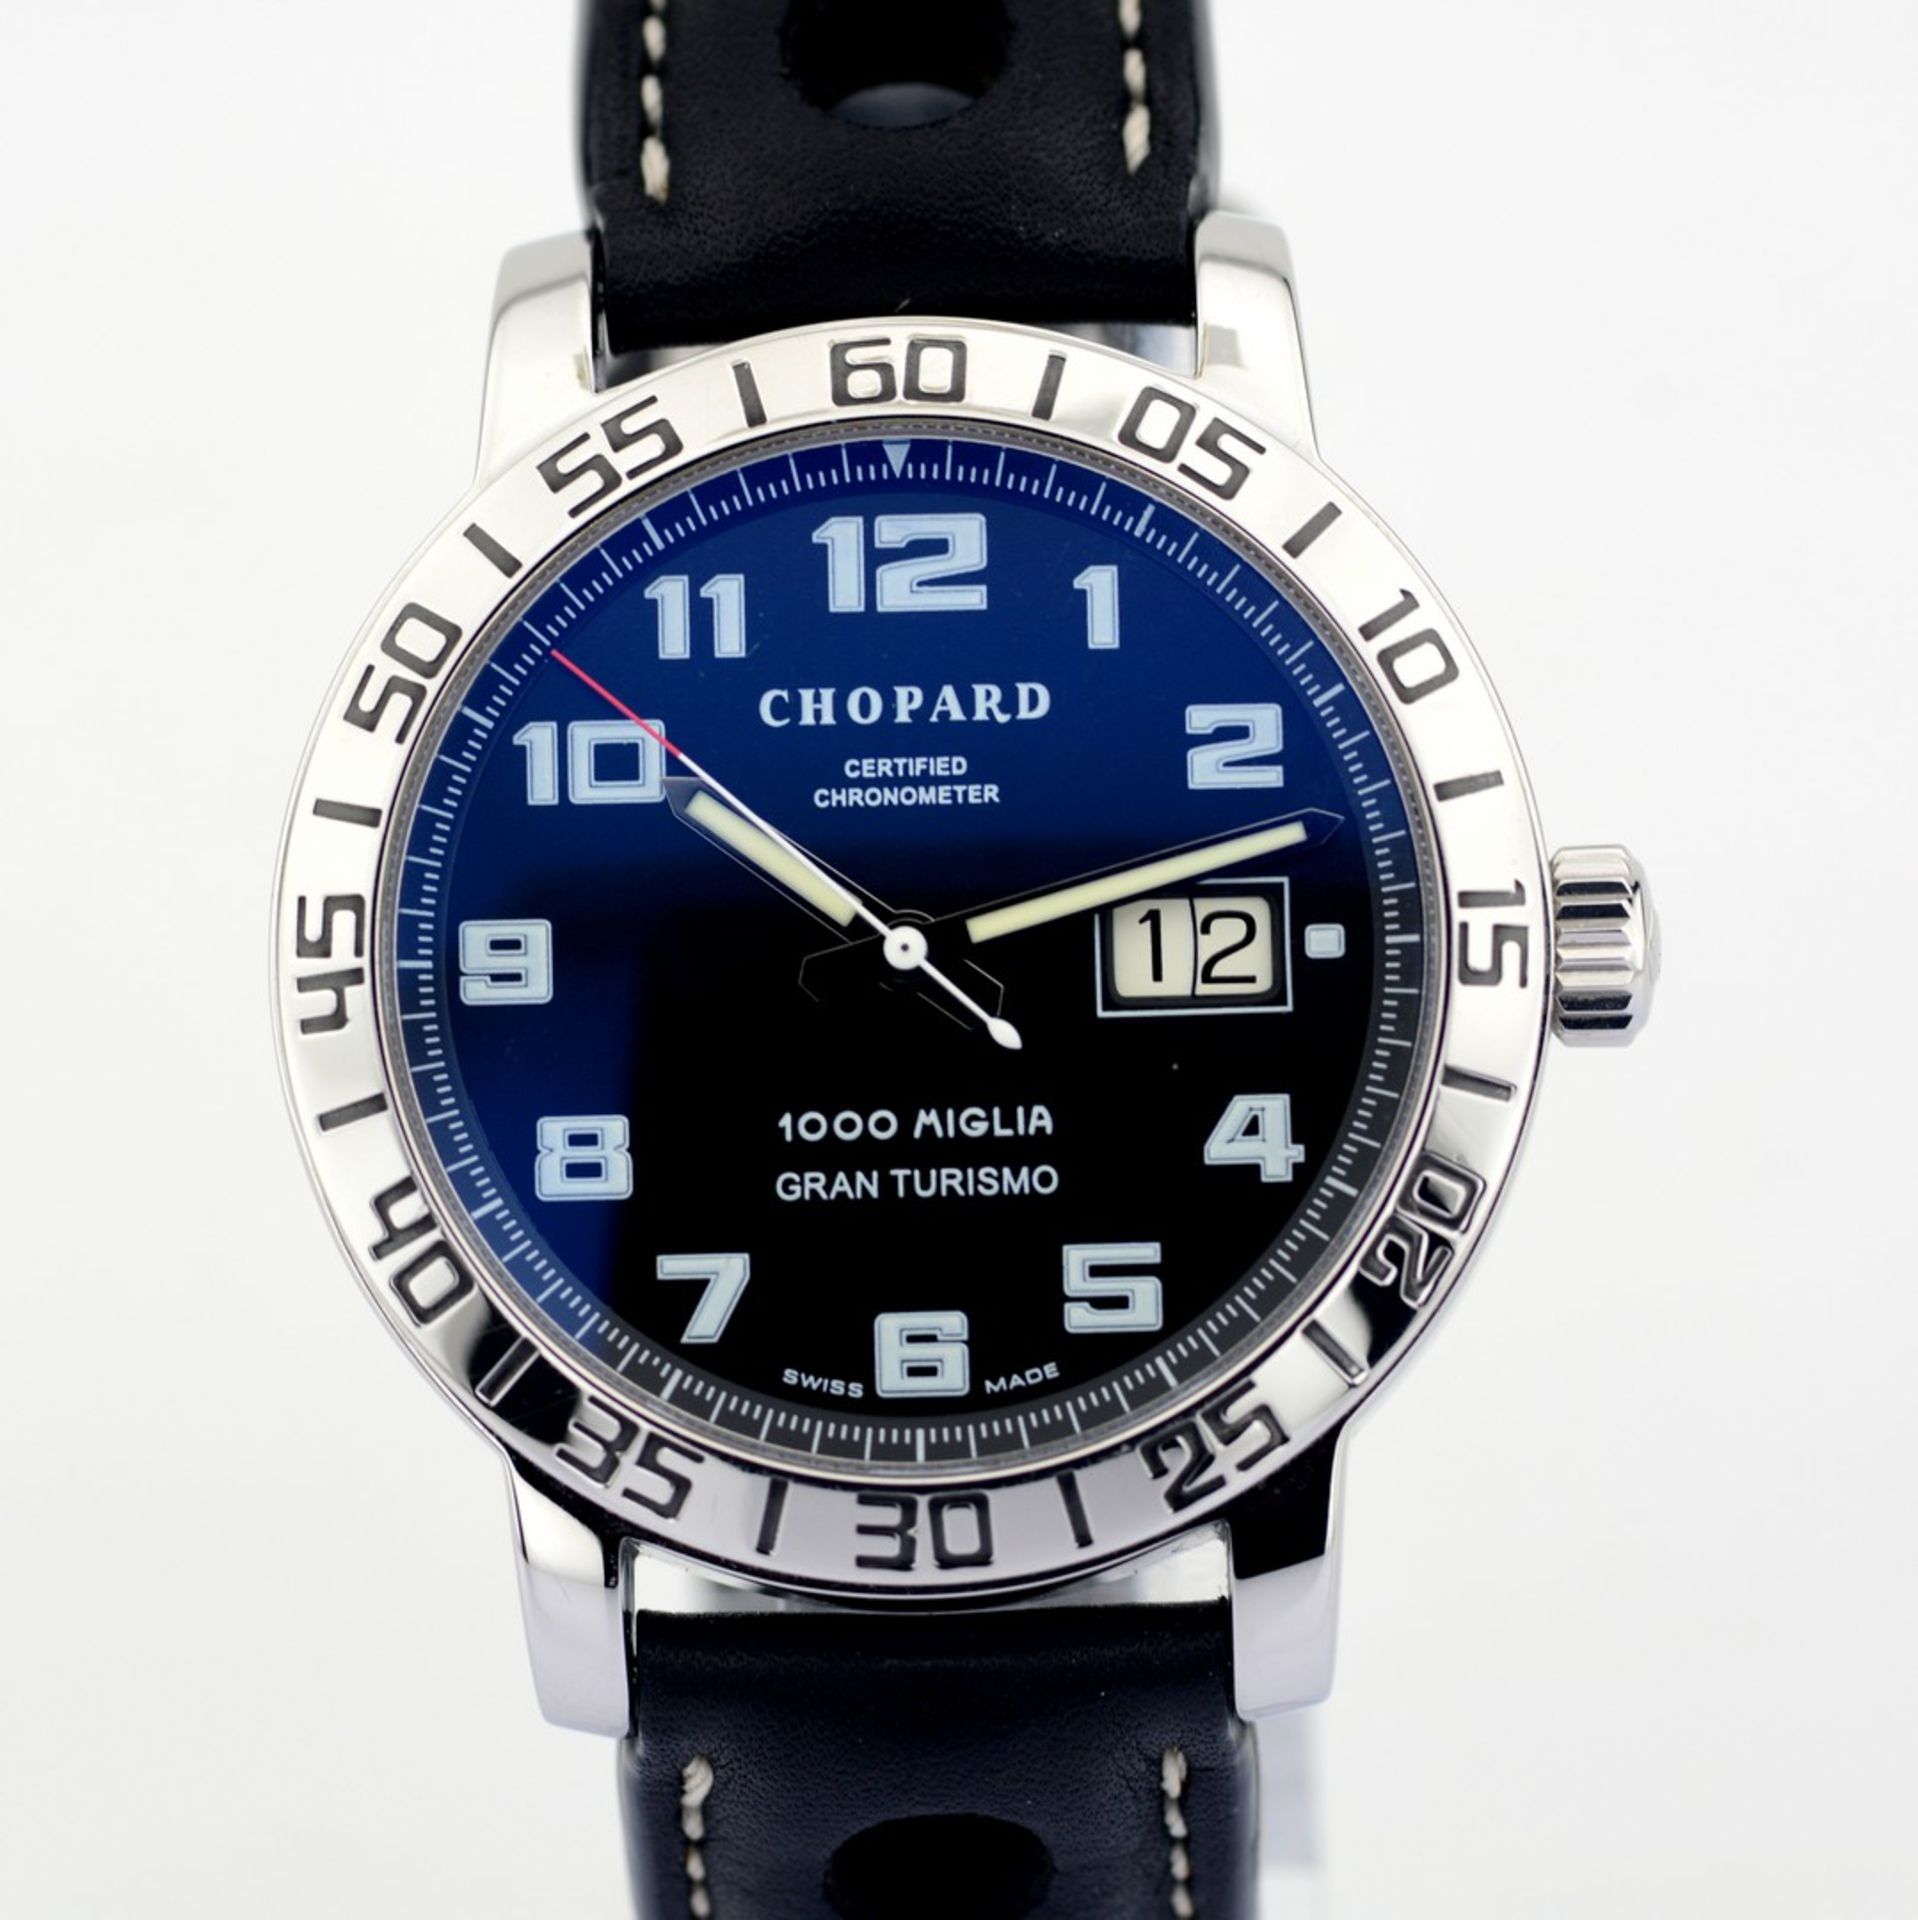 Chopard / 1000 Miglia Grand Turismo Prototype - Gentlemen's Steel Wristwatch - Image 3 of 8